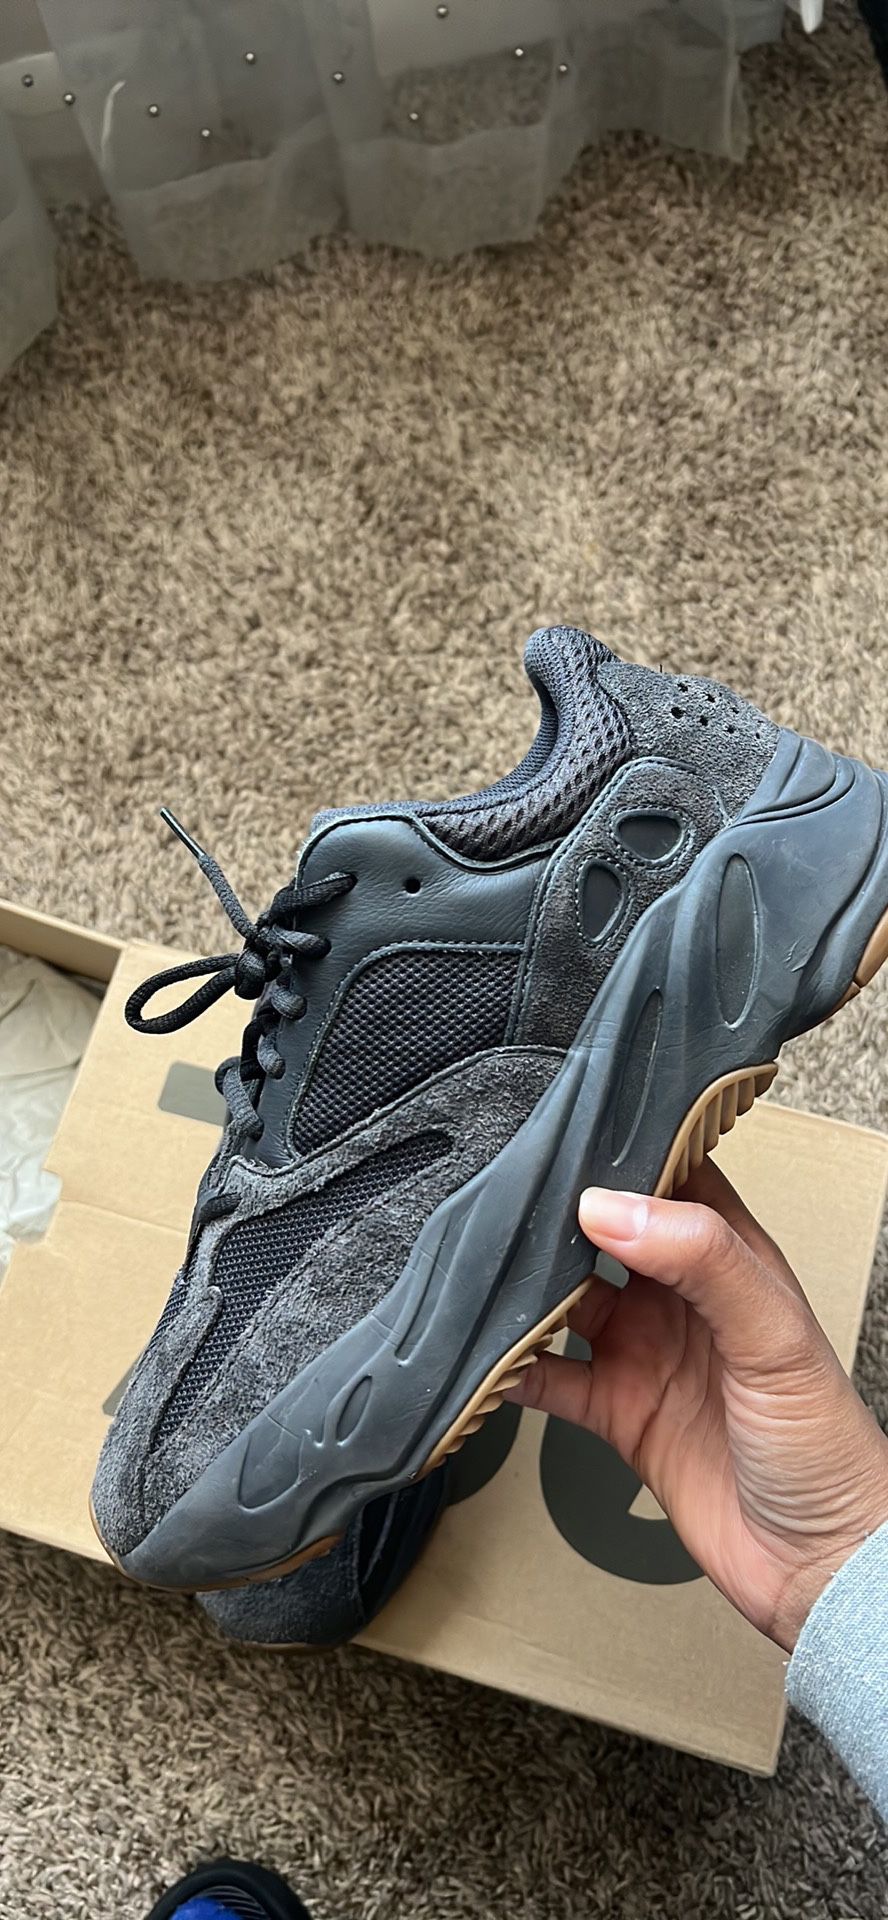 Yeezy 700 utility black gently worn men size 9.5 2019 pair